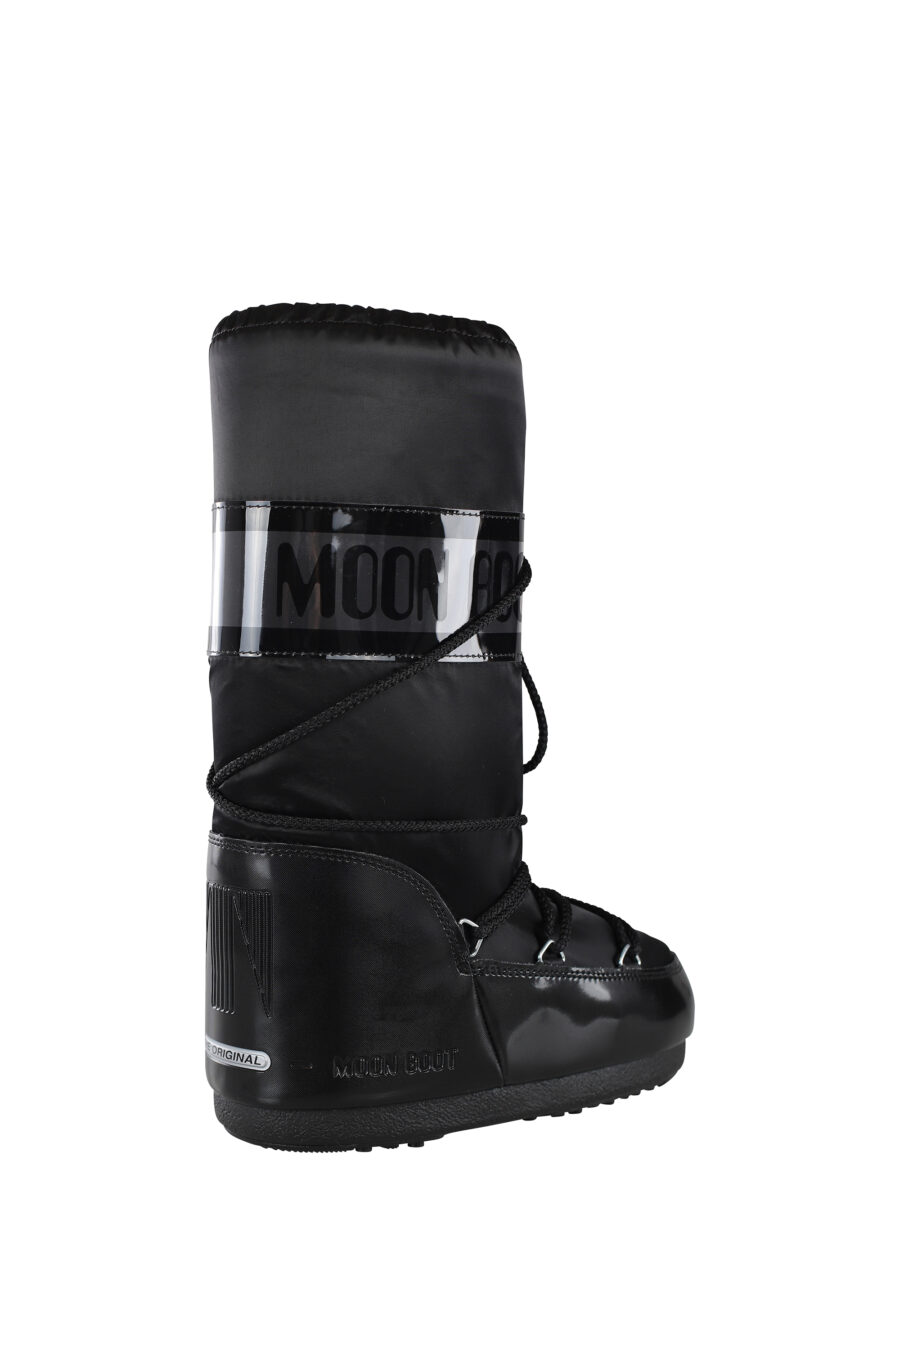 Black snow boots with monochrome white logo - IMG 6801